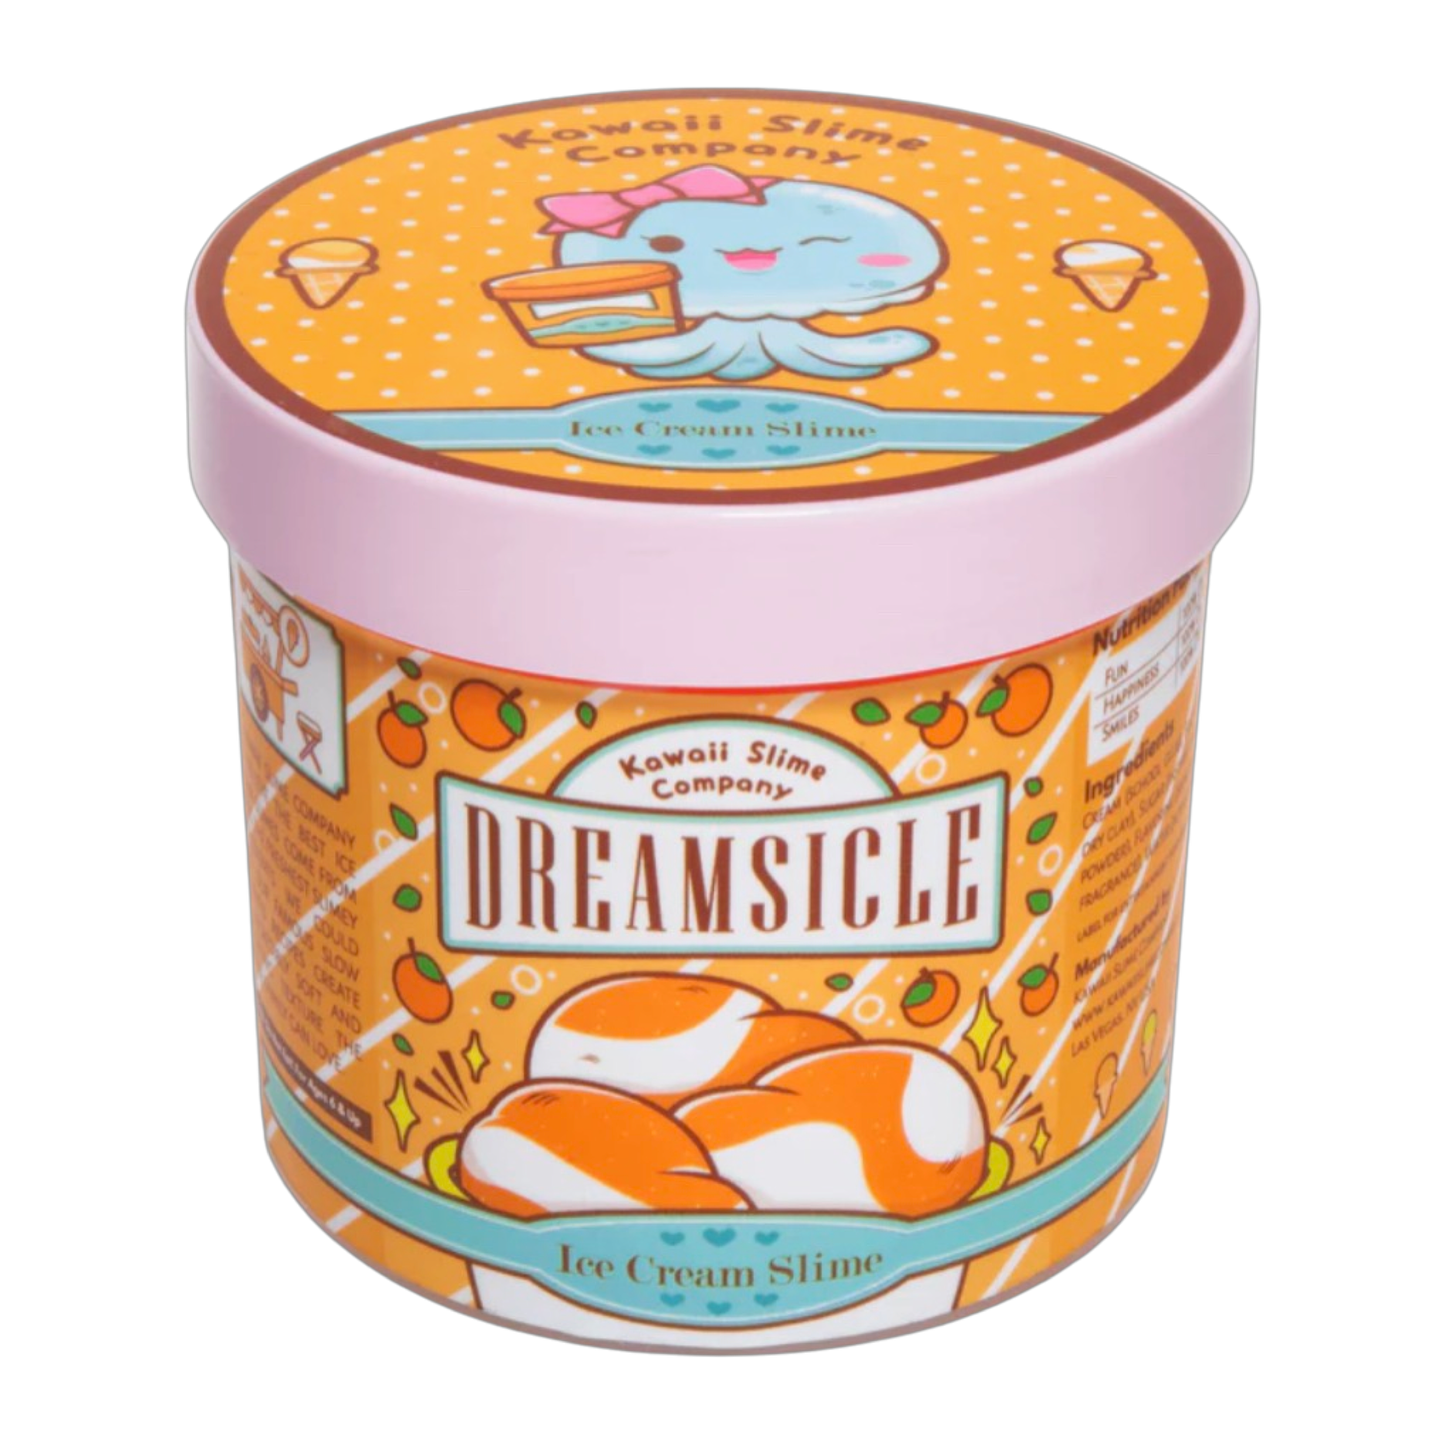 Dreamsicle Ice Cream Slime